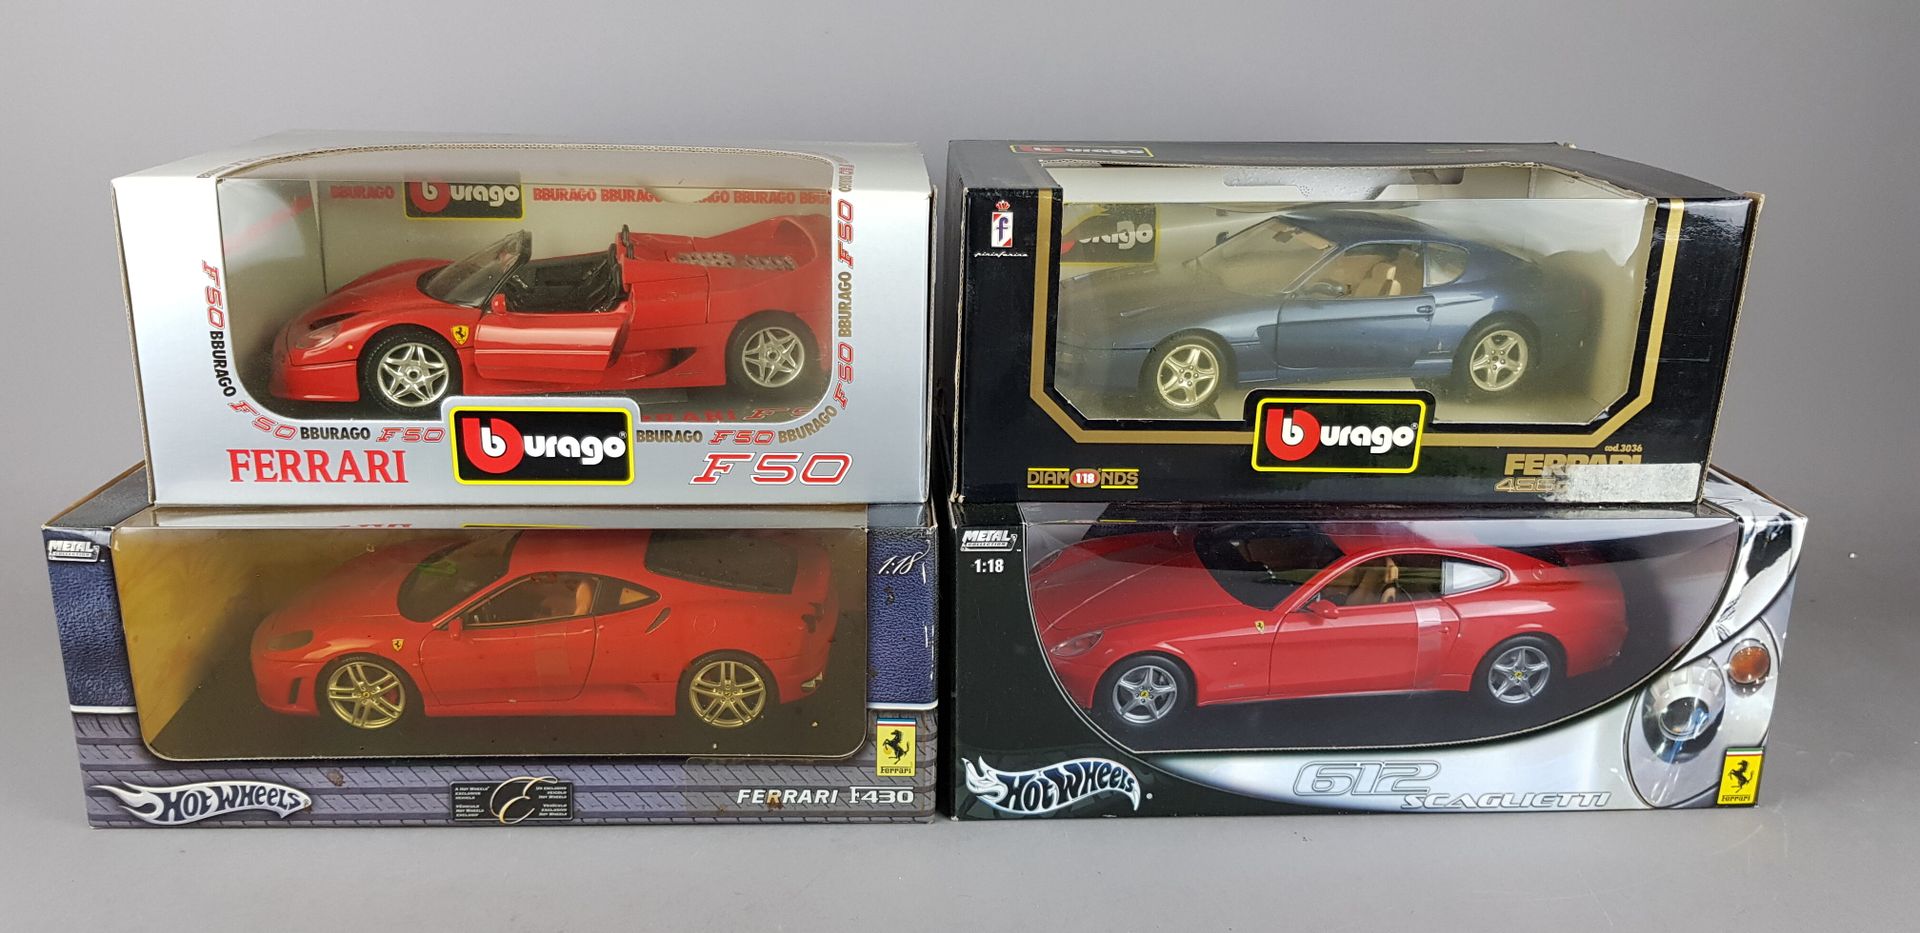 Null QUATRE Ferrari échelle 1/18 :

2x HOT WHEELS F430 et 612 Scaglietti

2x Bur&hellip;